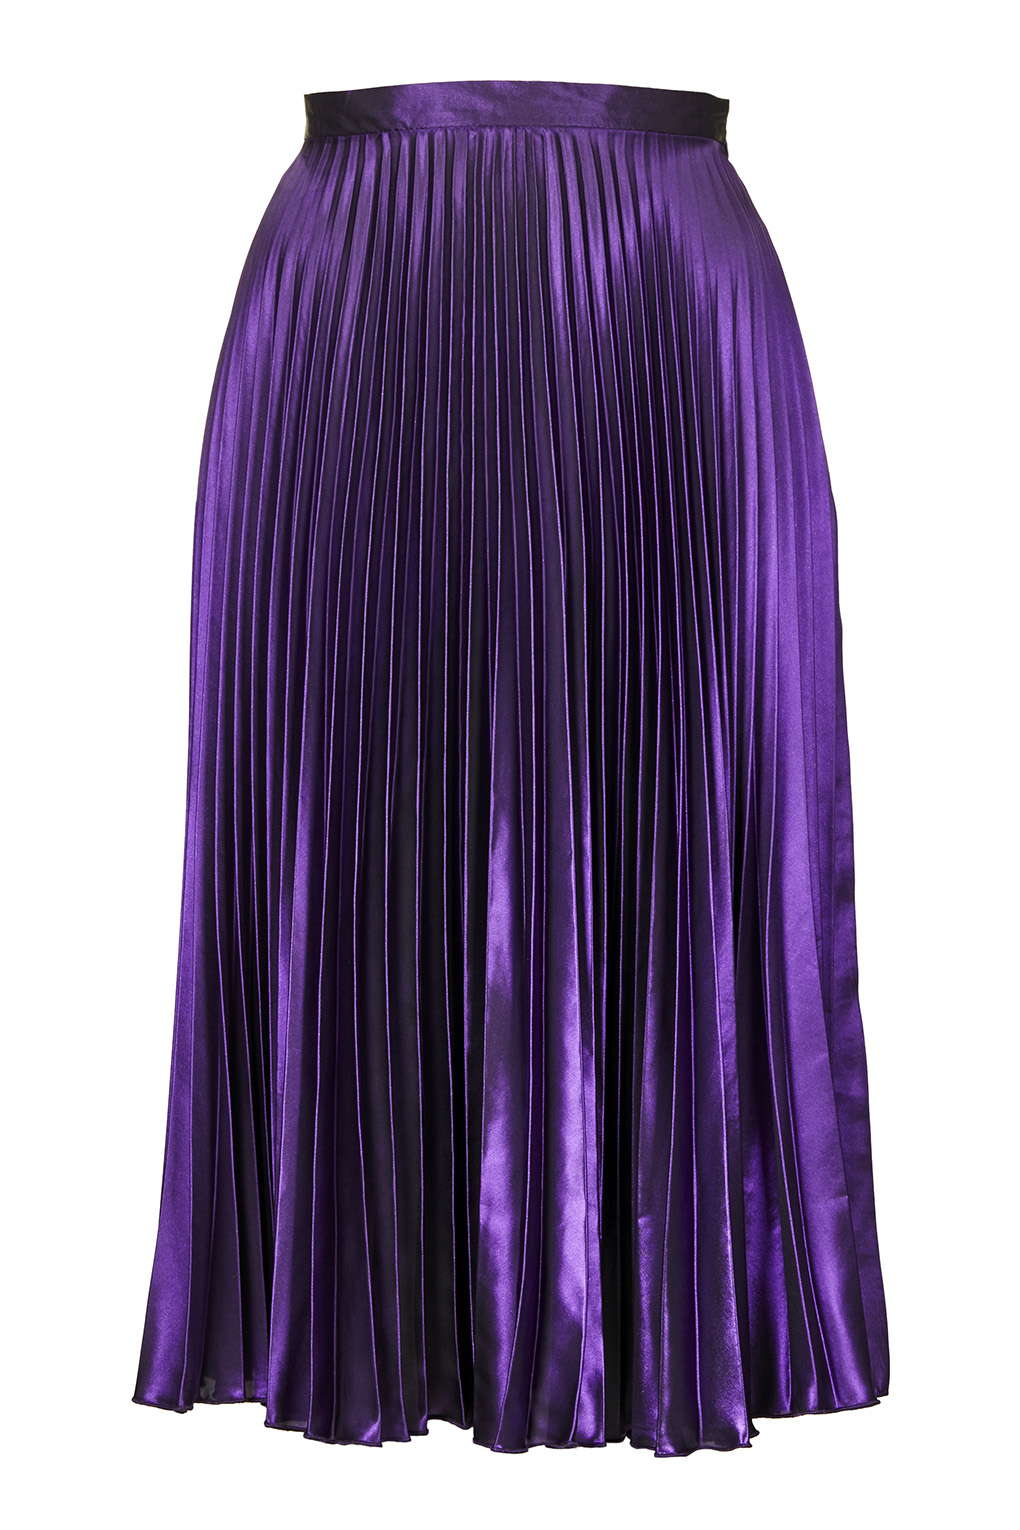 Lyst - Topshop Foil Pleated Midi Skirt in Purple